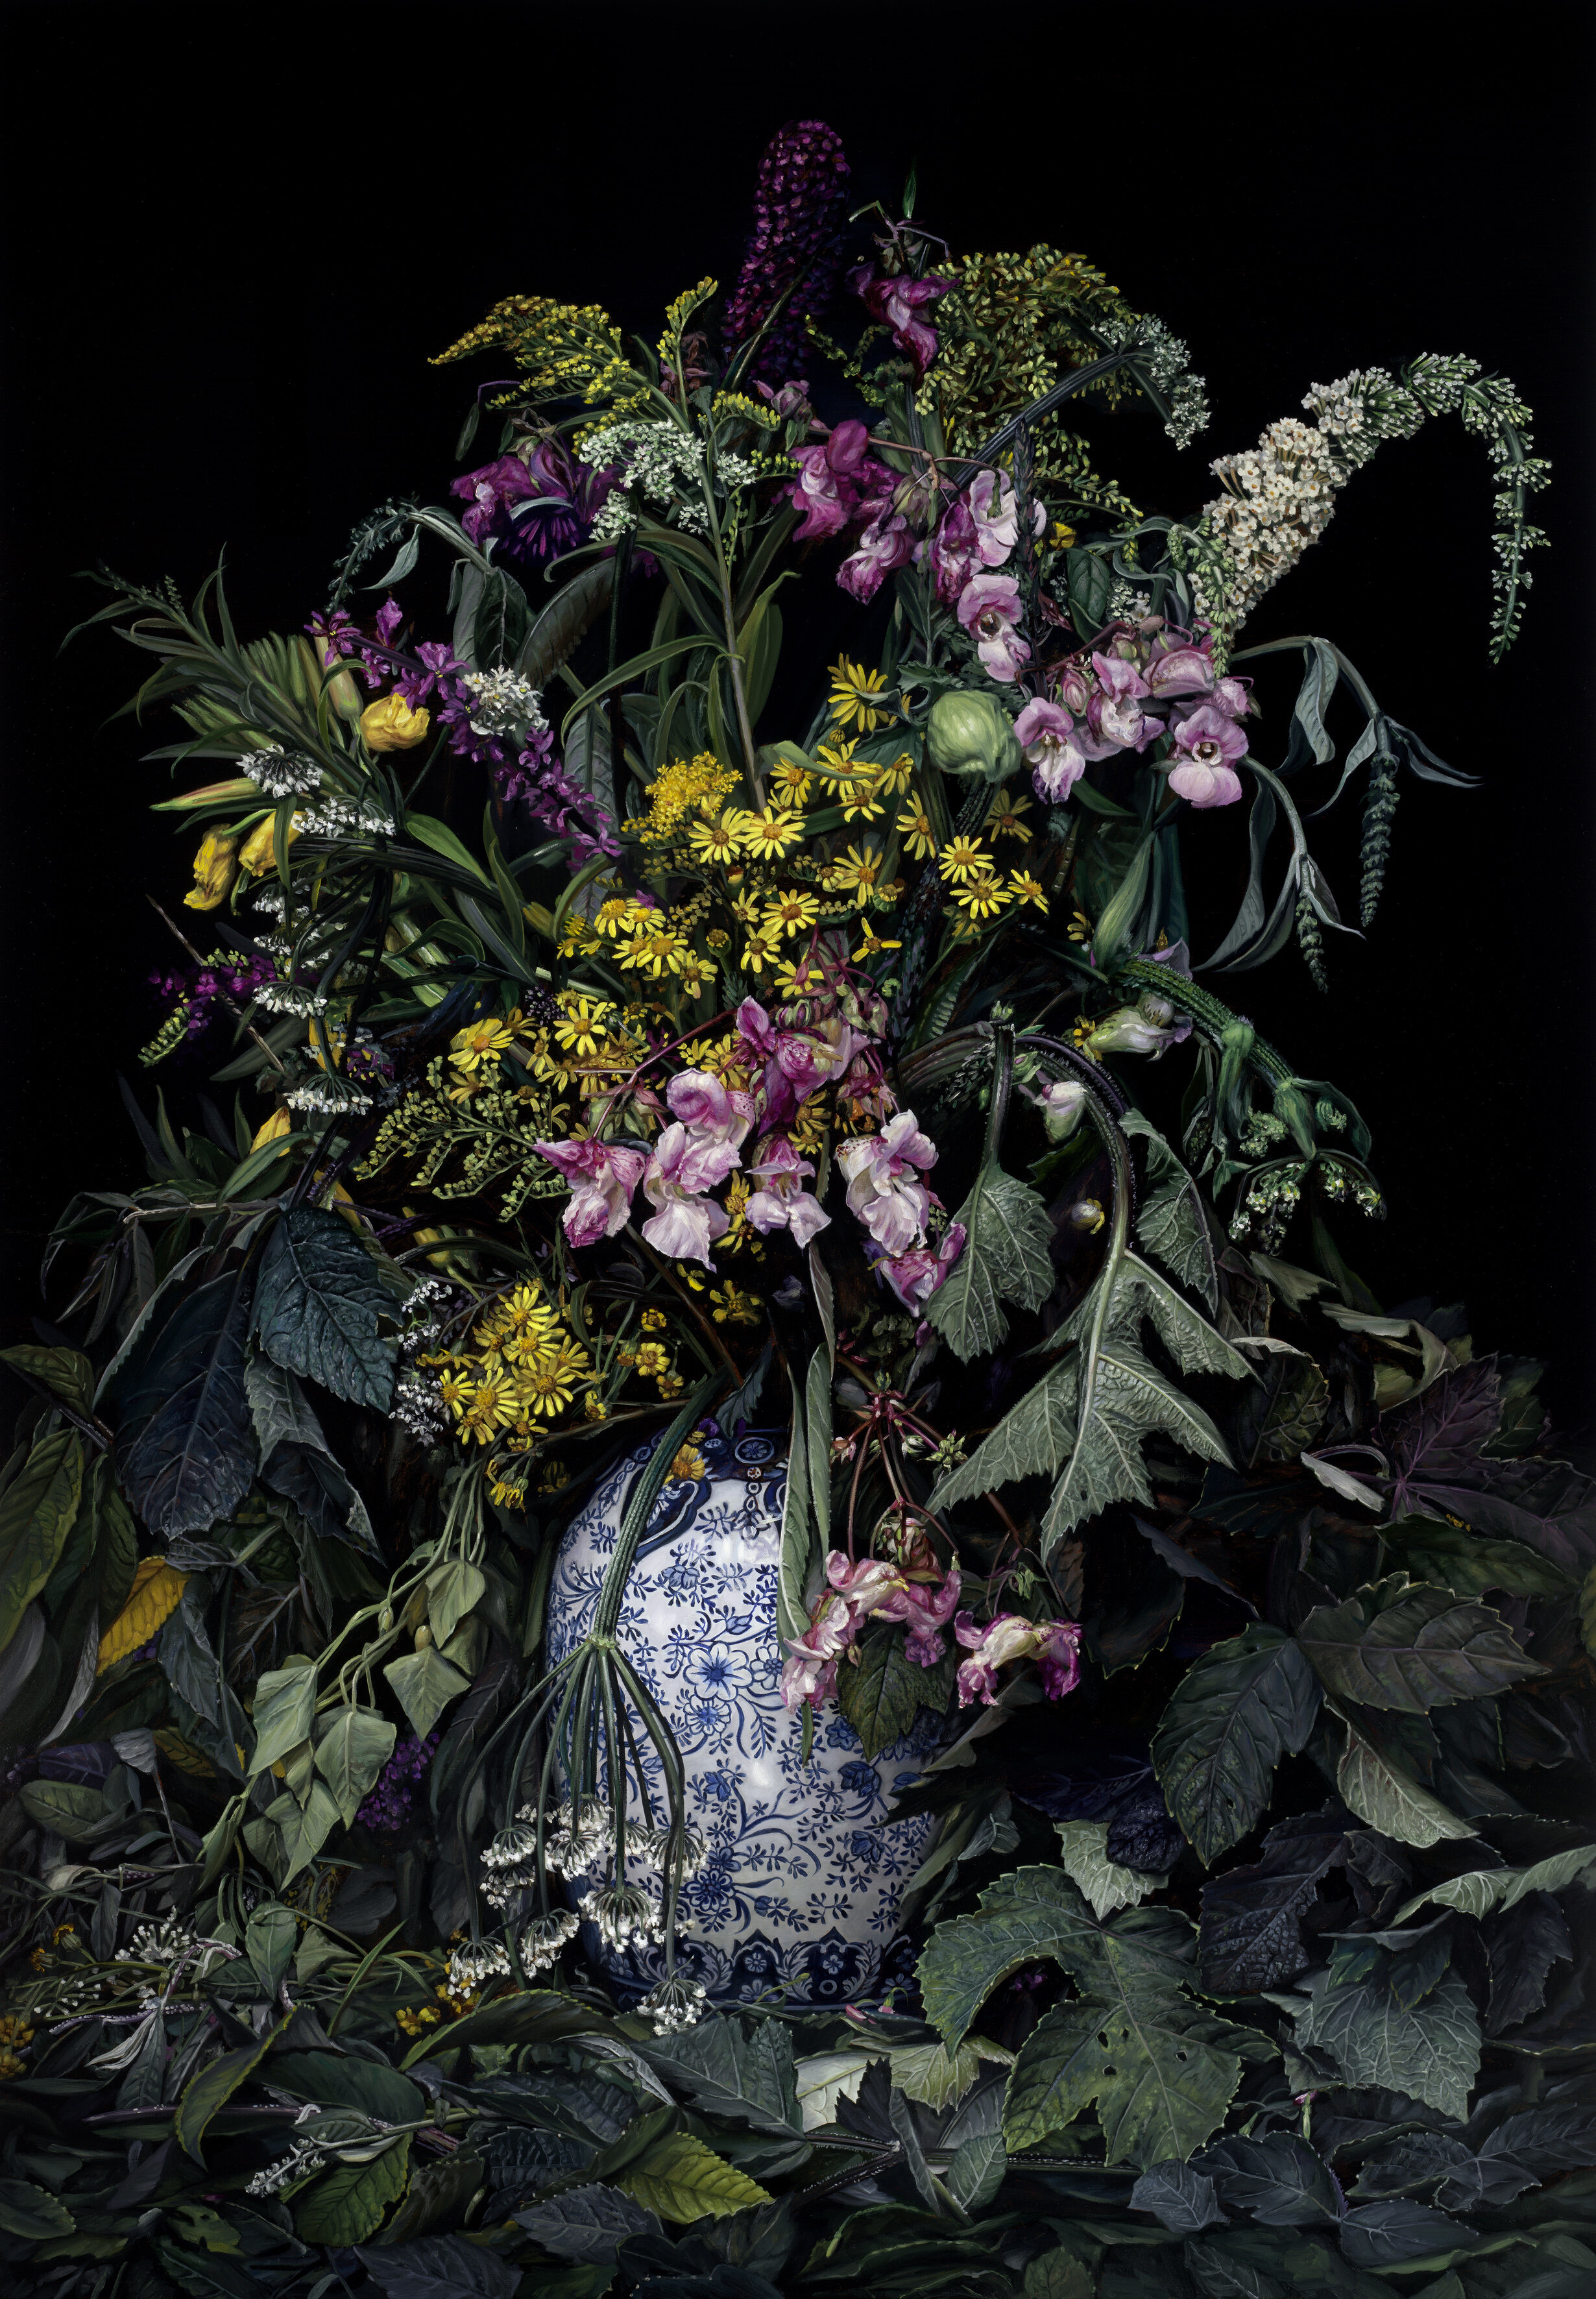 Cindy Wright, Invasive Bouquet, 2020